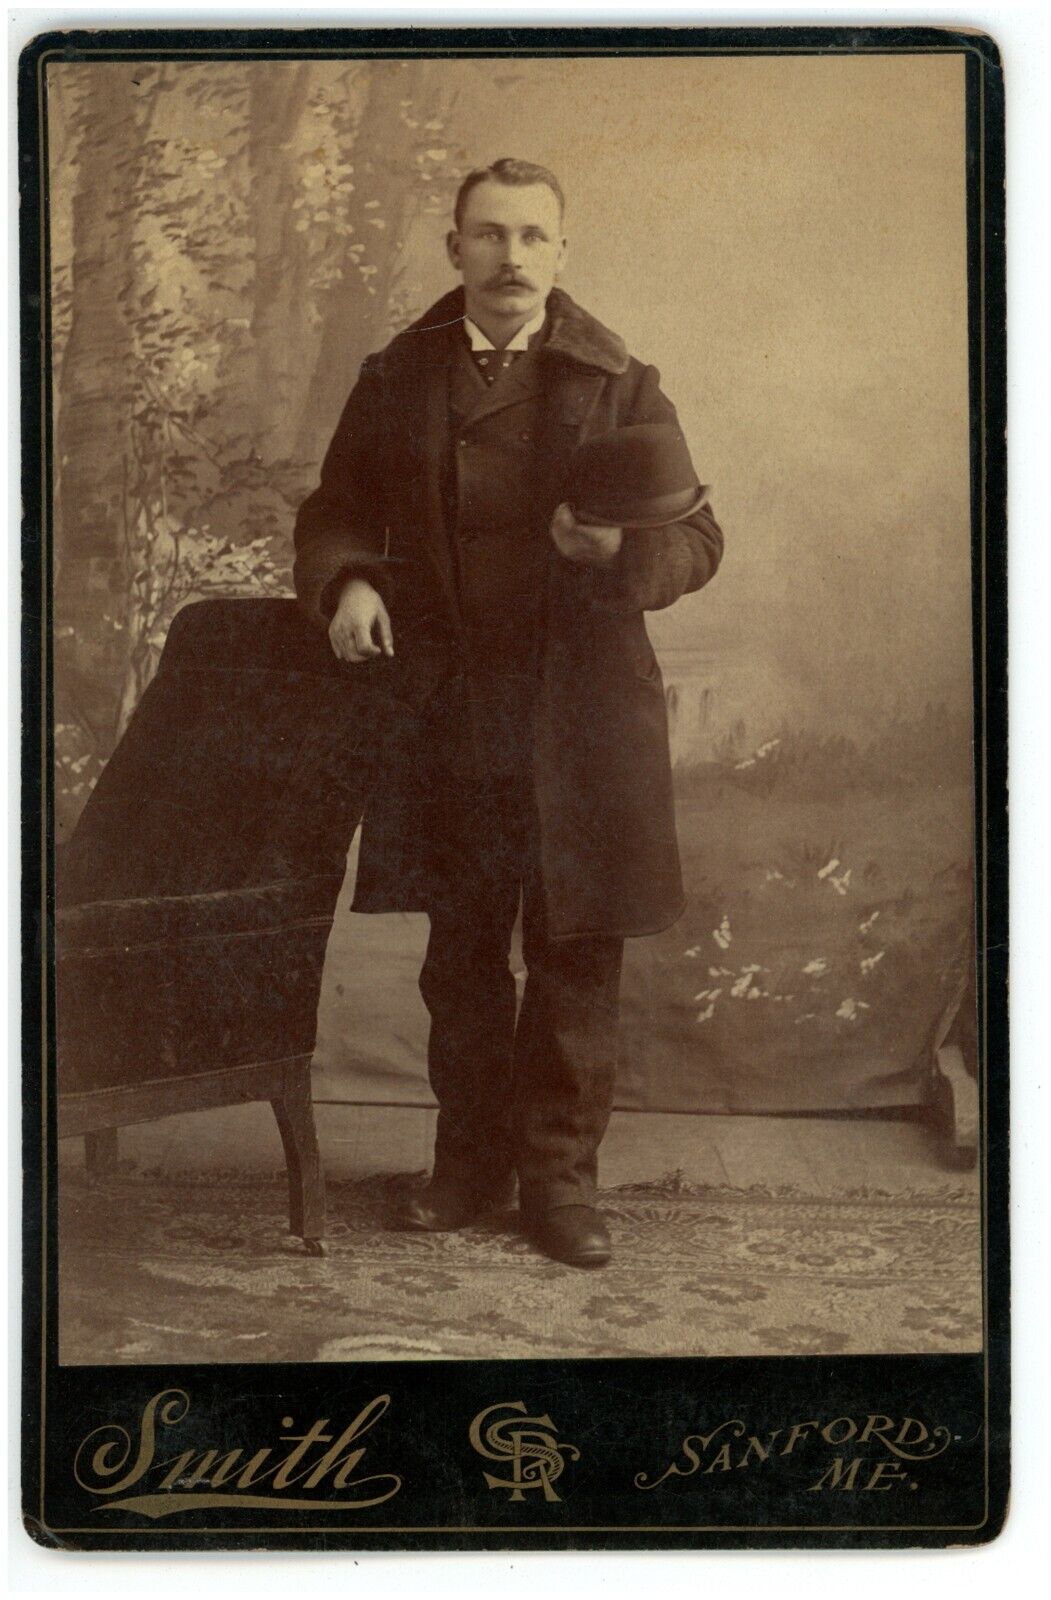 Antique c1880s Cabinet Card Handsome Dashing Man in Suit Coat w. Hat Sanford, ME